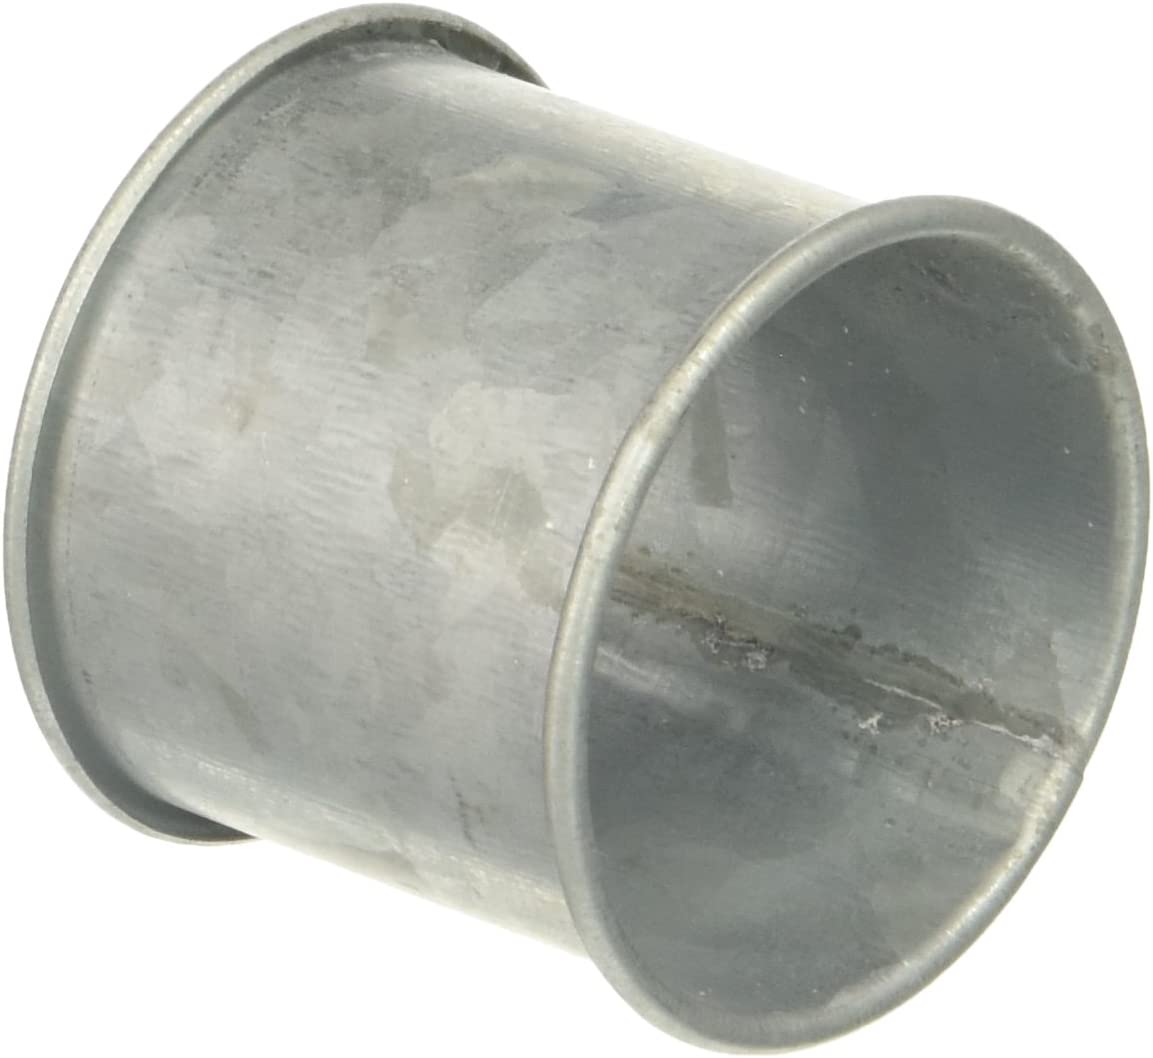 SARO LIFESTYLE NR372.S Galvanized Design Rustic Style Metal Napkin Ring-Set of 4, Silver, 2.5″ x 3.5″